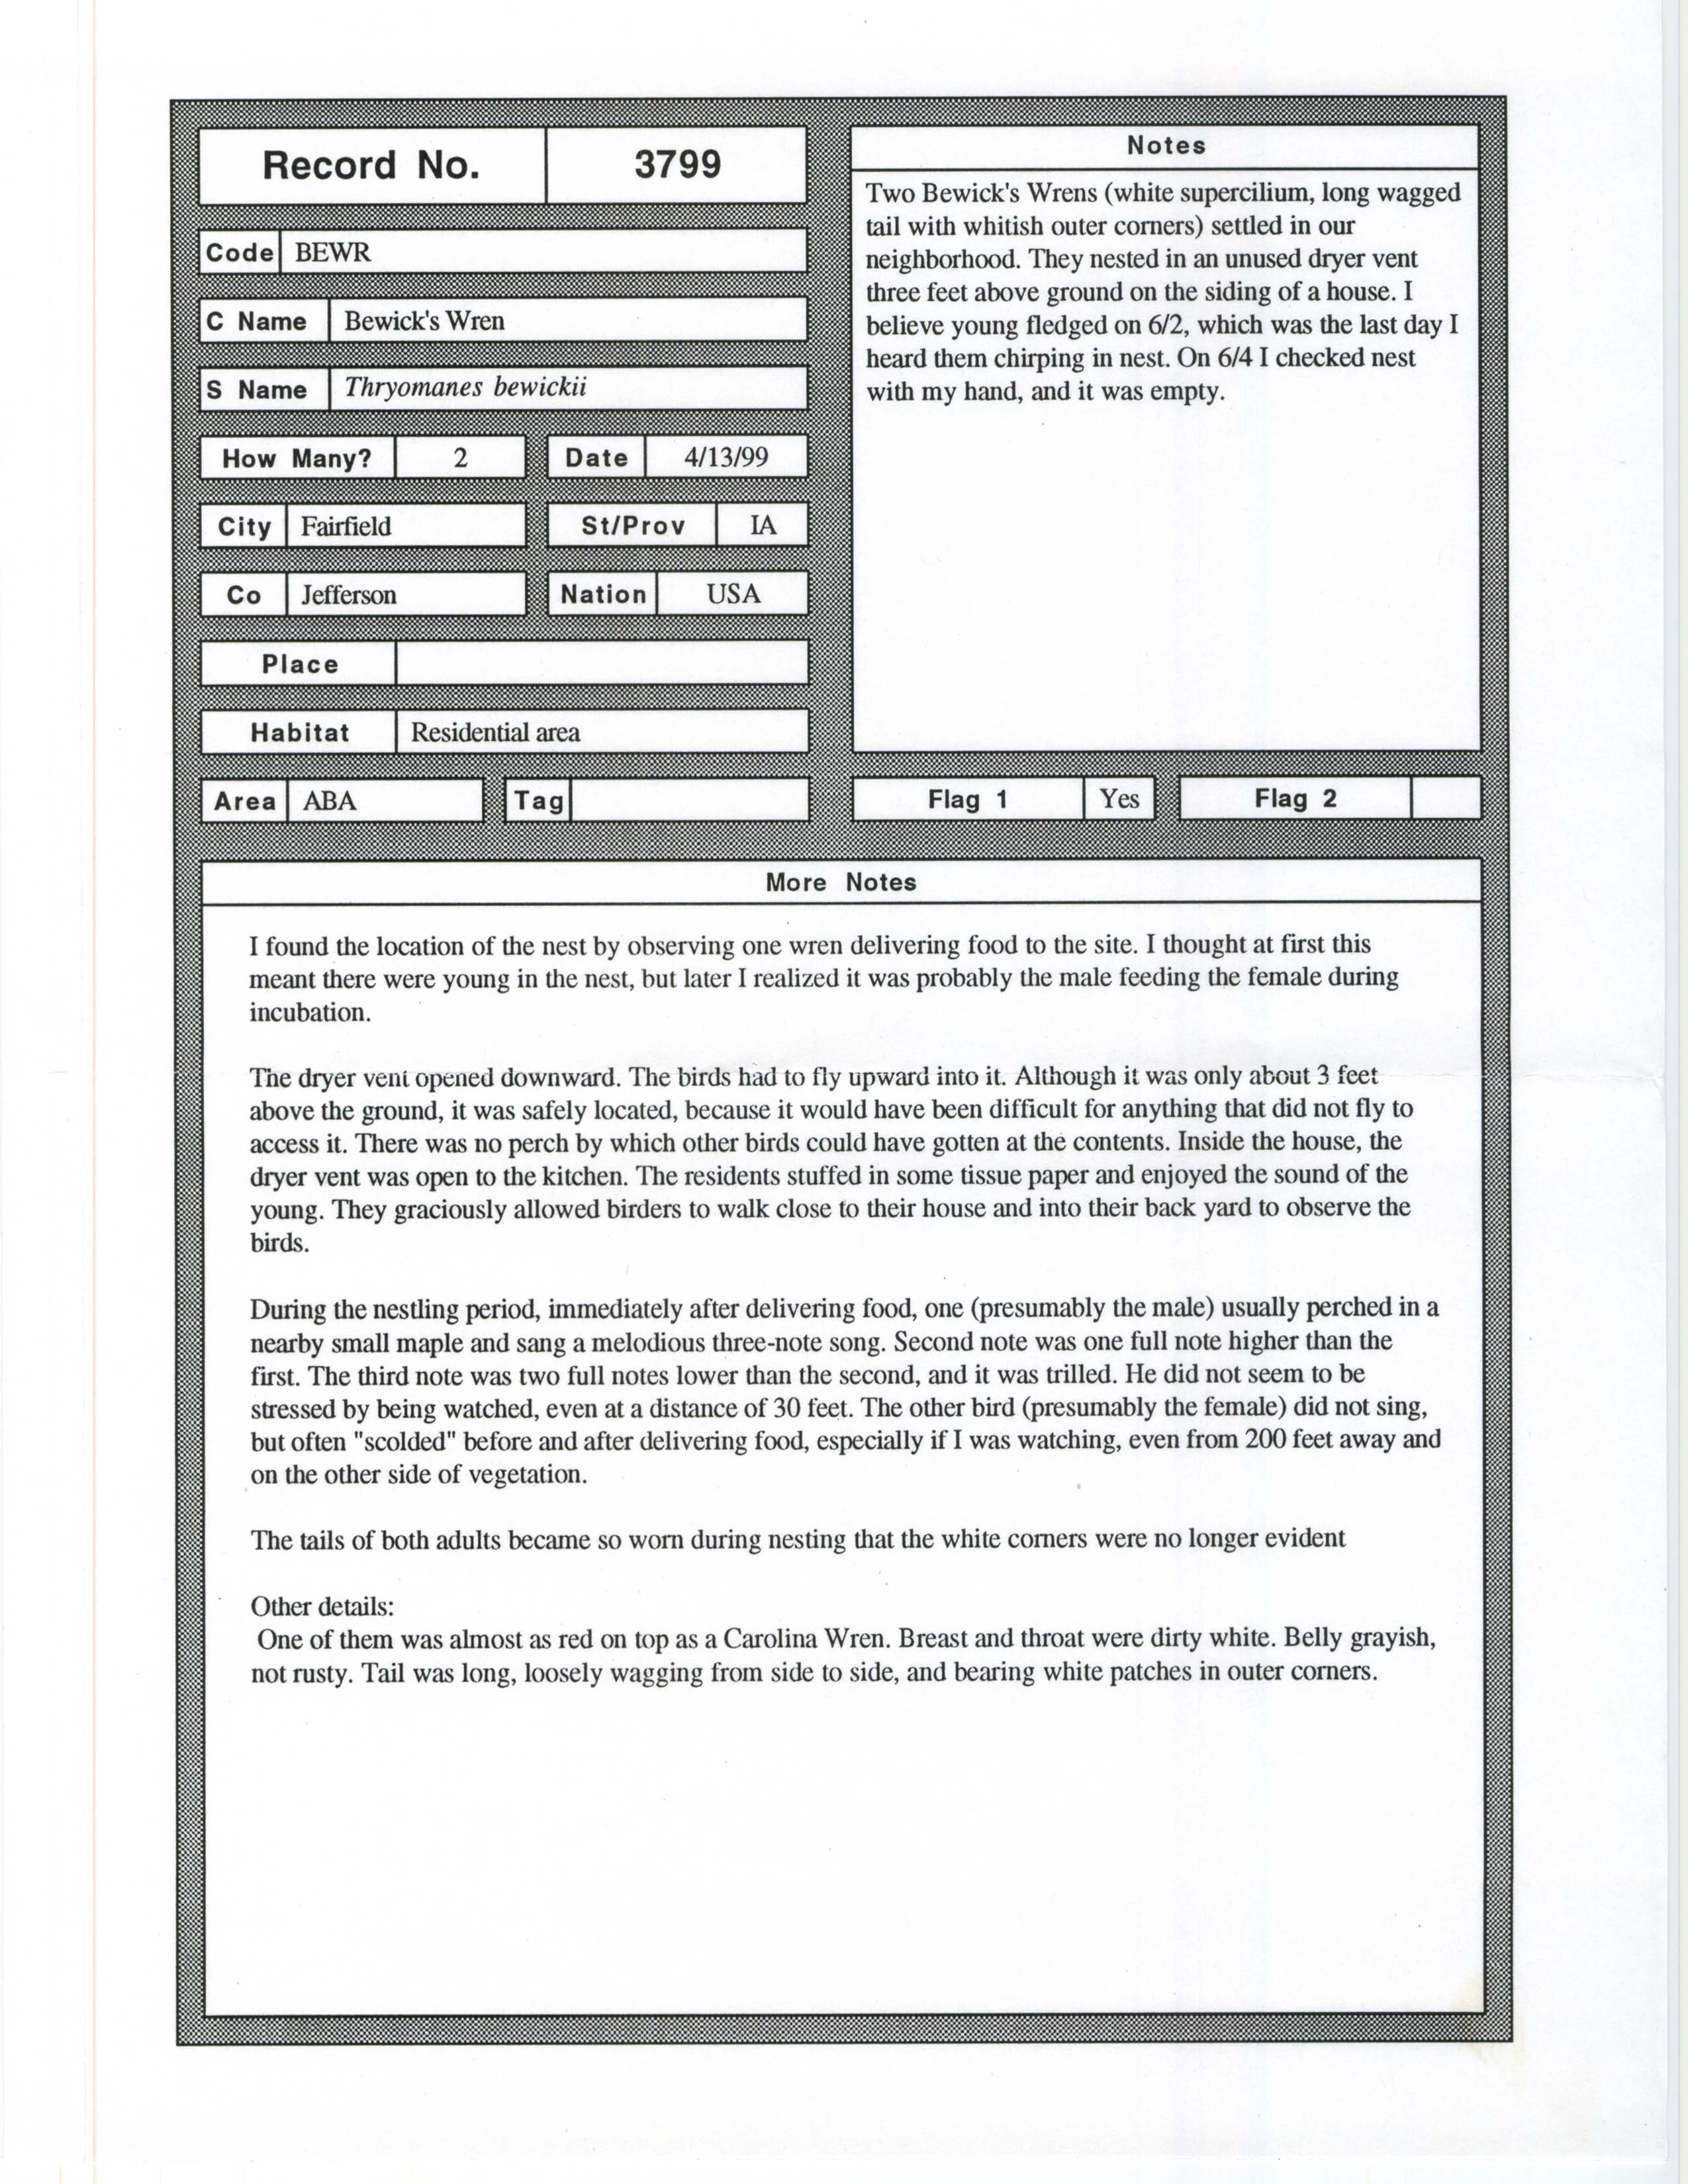 Rare bird documentation form for Bewick's Wren at Fairfield, 1999